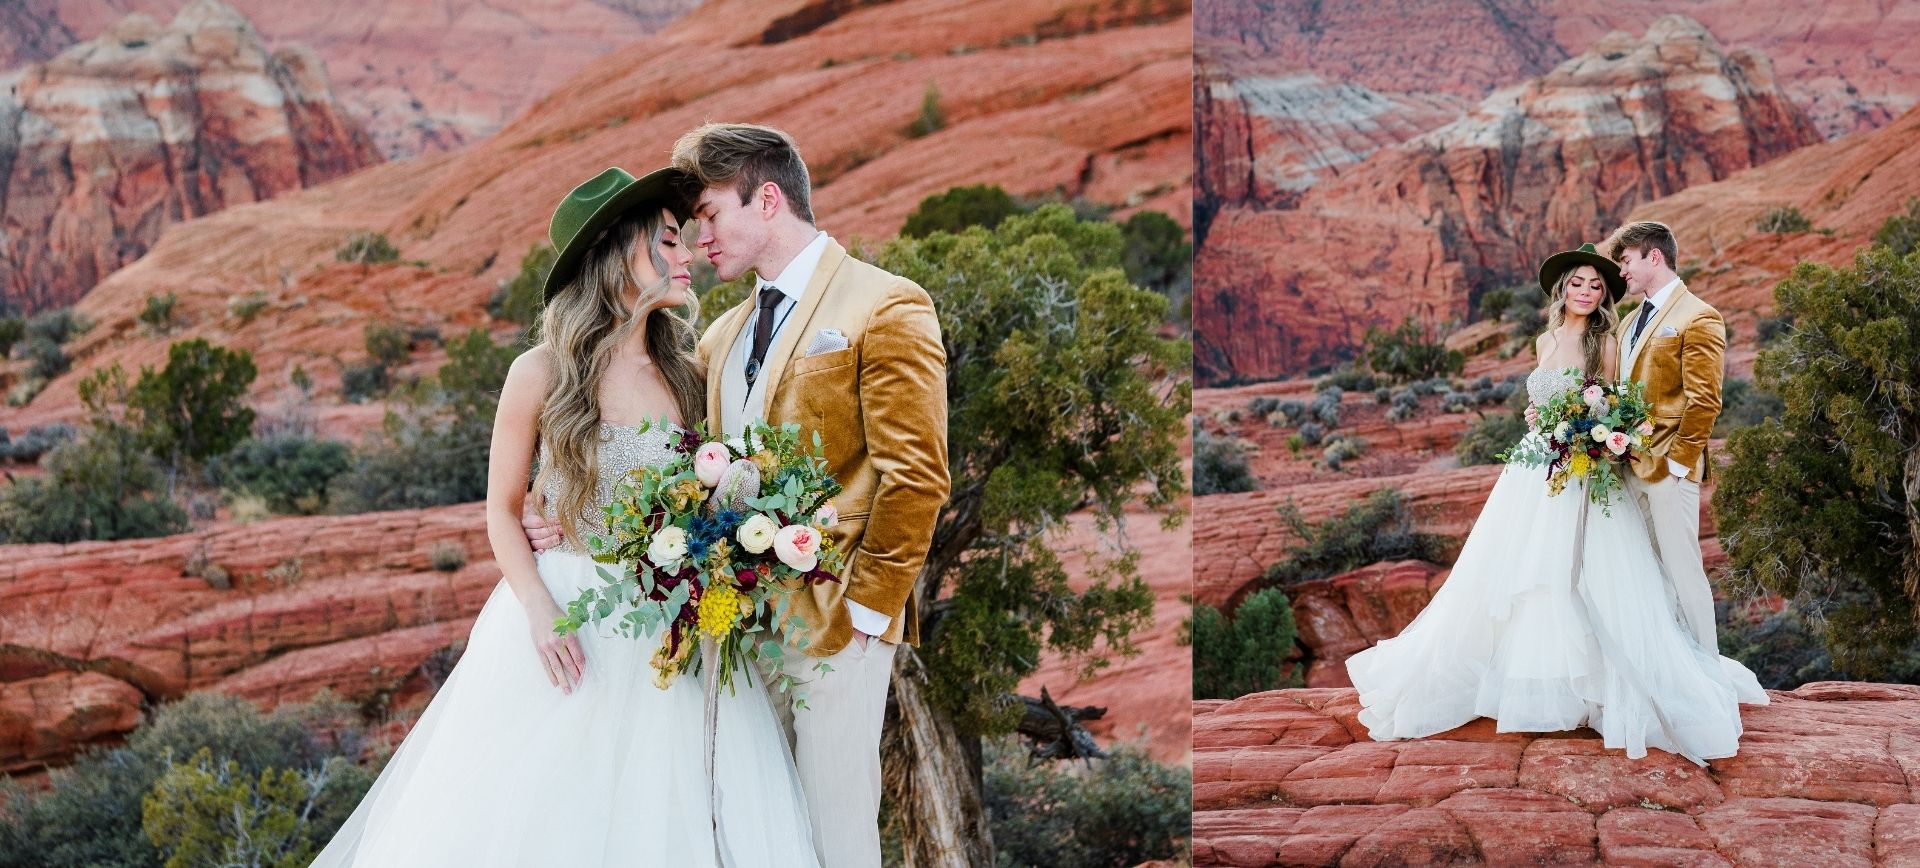 utah elopement package - red rocks sunset wedding photos during adventure elopement